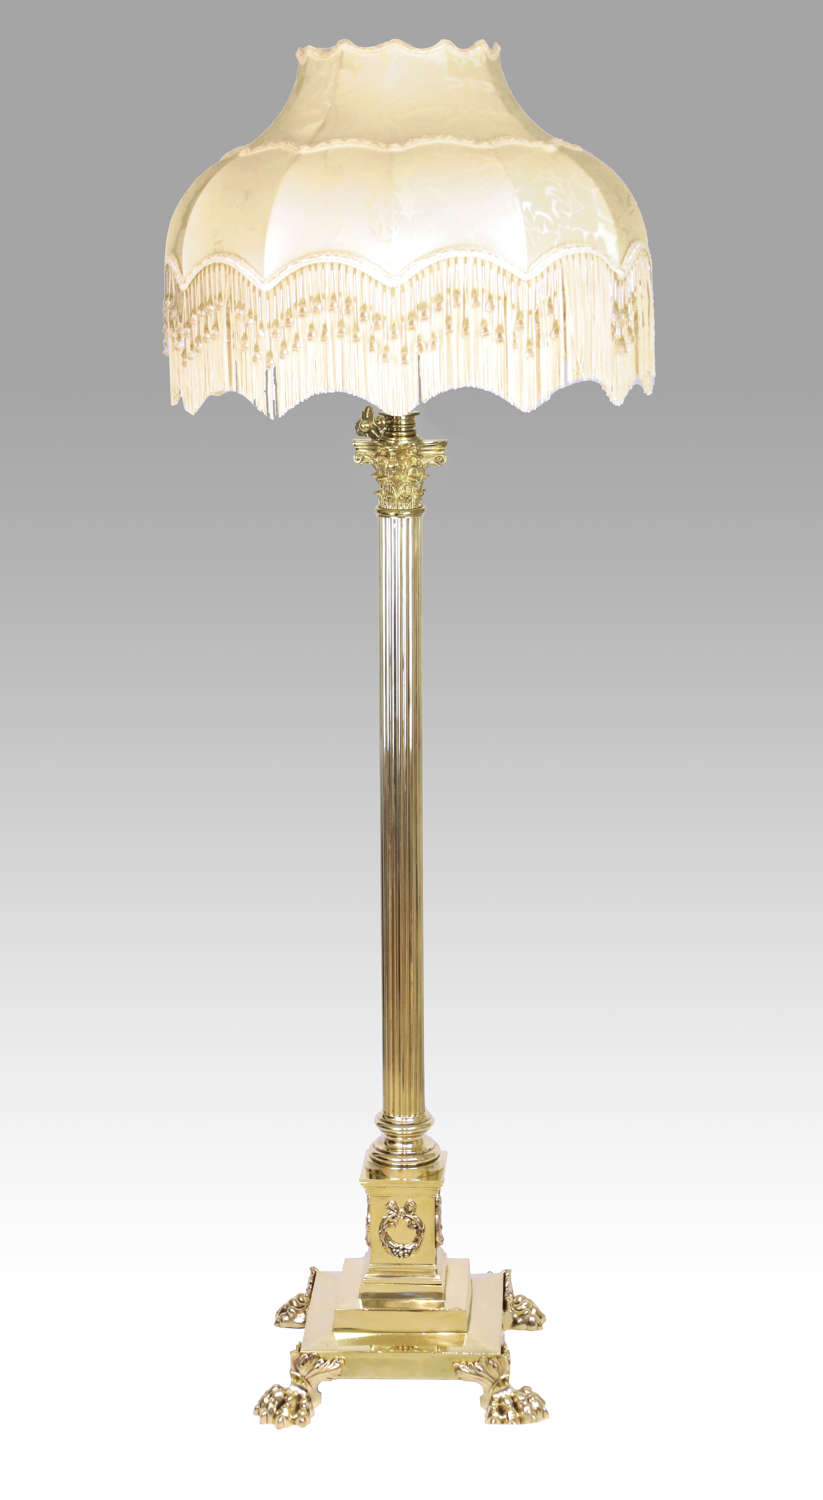 A Hinks & Sons Victorian Brass Corinthian Column Adjustable floor Lamp